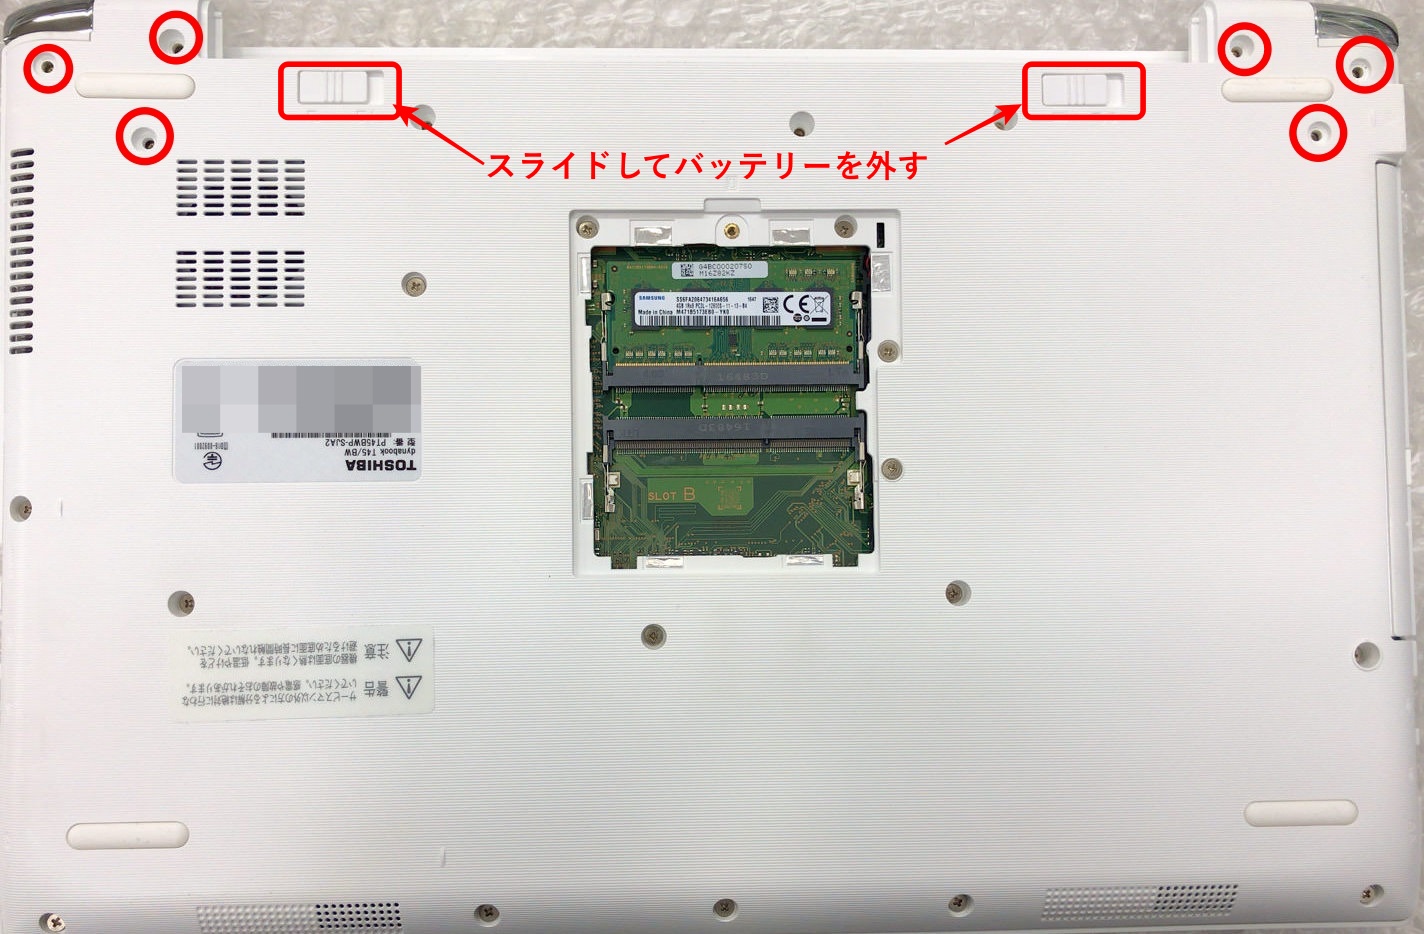 PC/タブレット ノートPC Toshiba dynabook T45/B のSSD交換方法【高速化】 | Naosuyo Blog